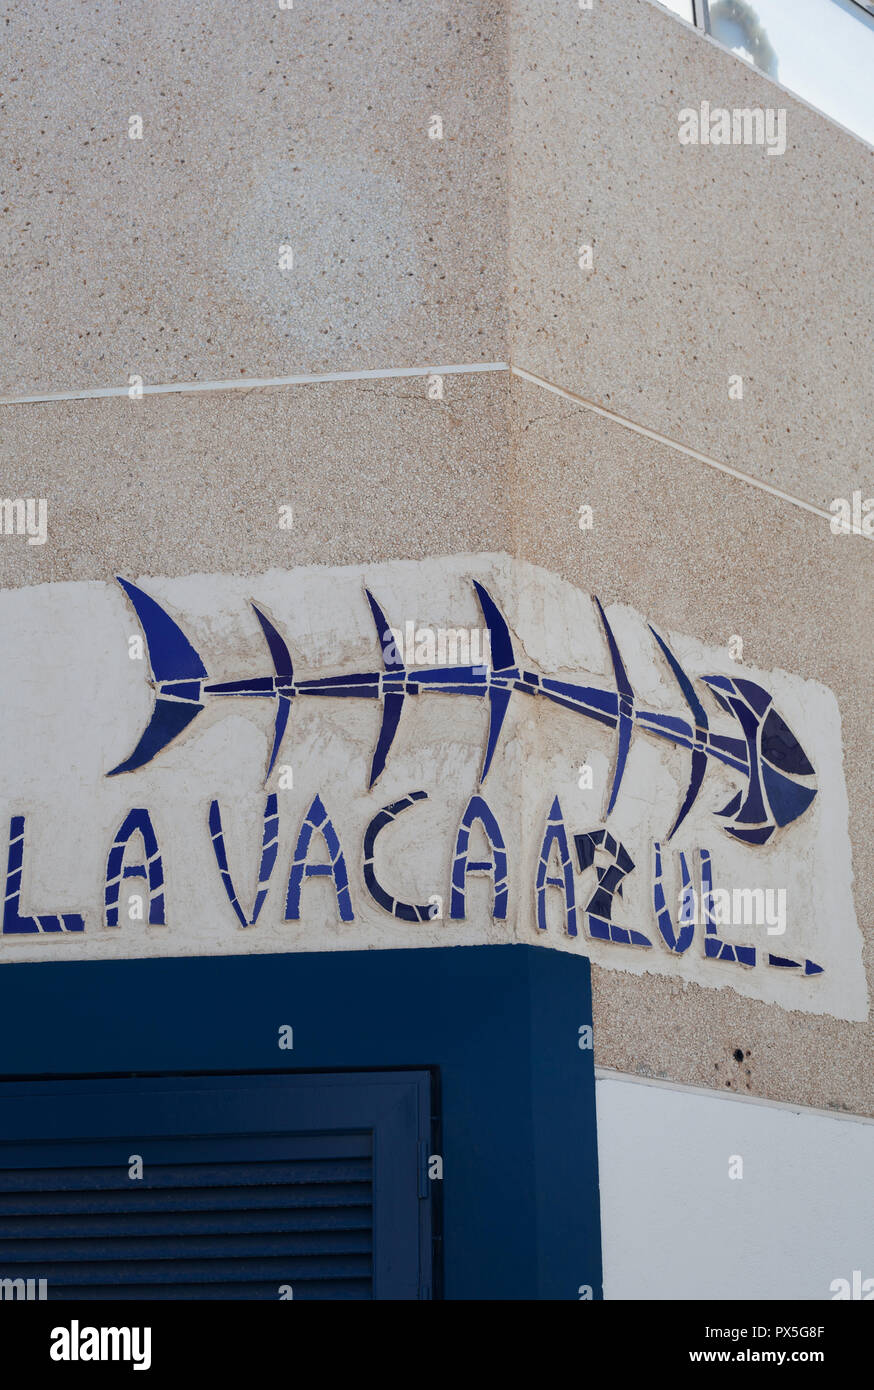 Street sign for La Vaca Azul (the Blue Cow) restaurant in El Cotillo, La Oliva, Fuerteventura, Canary Islands, Spain Stock Photo